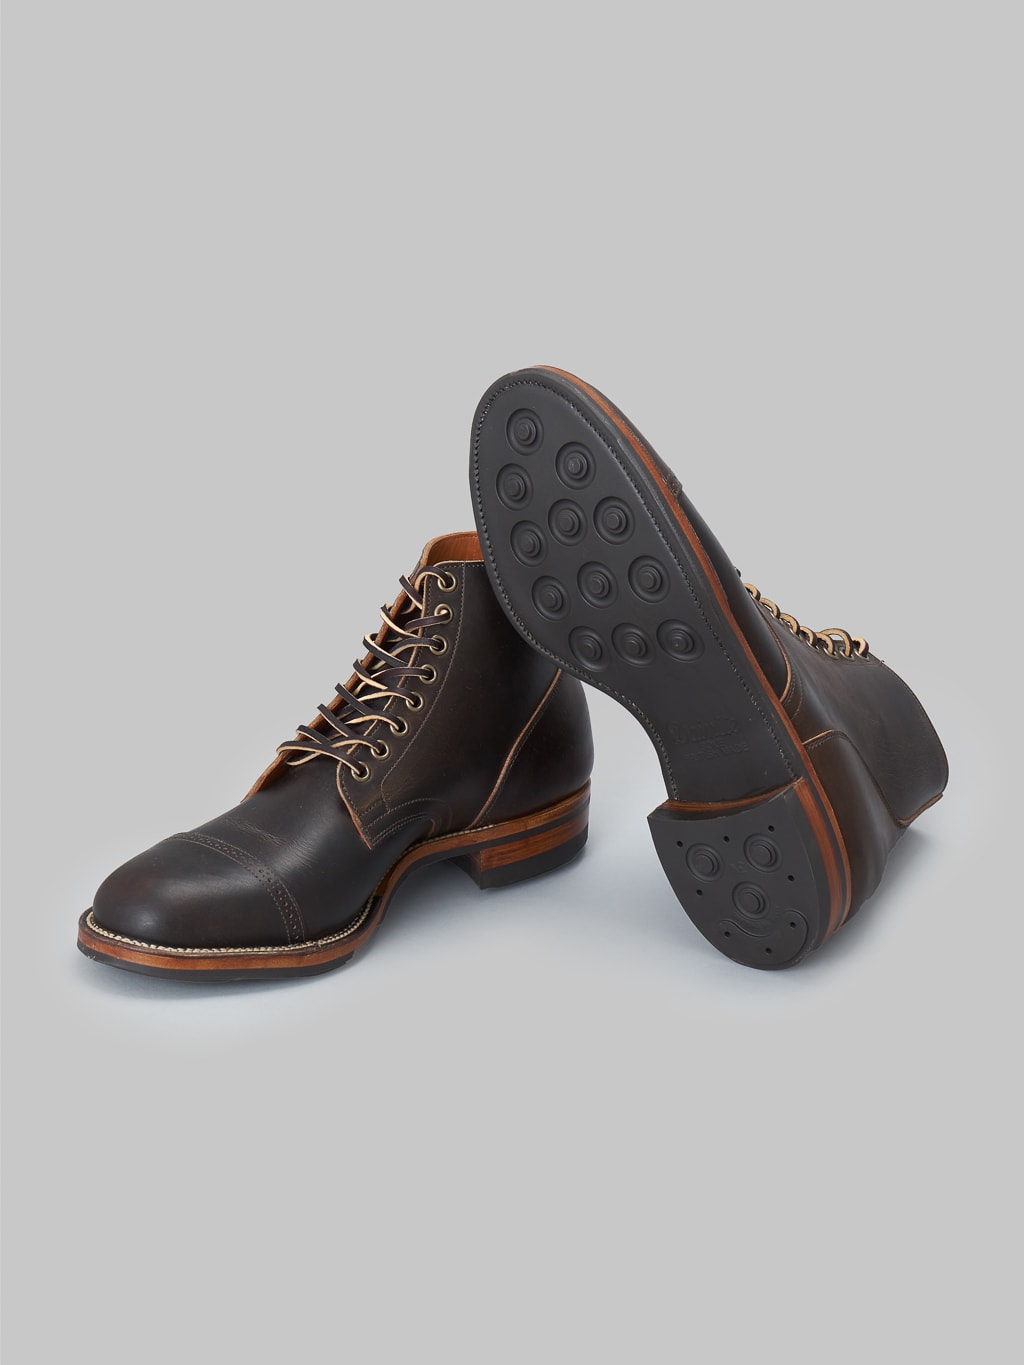 viberg service boot 2023 bct antique phoenix dark brown leather sole